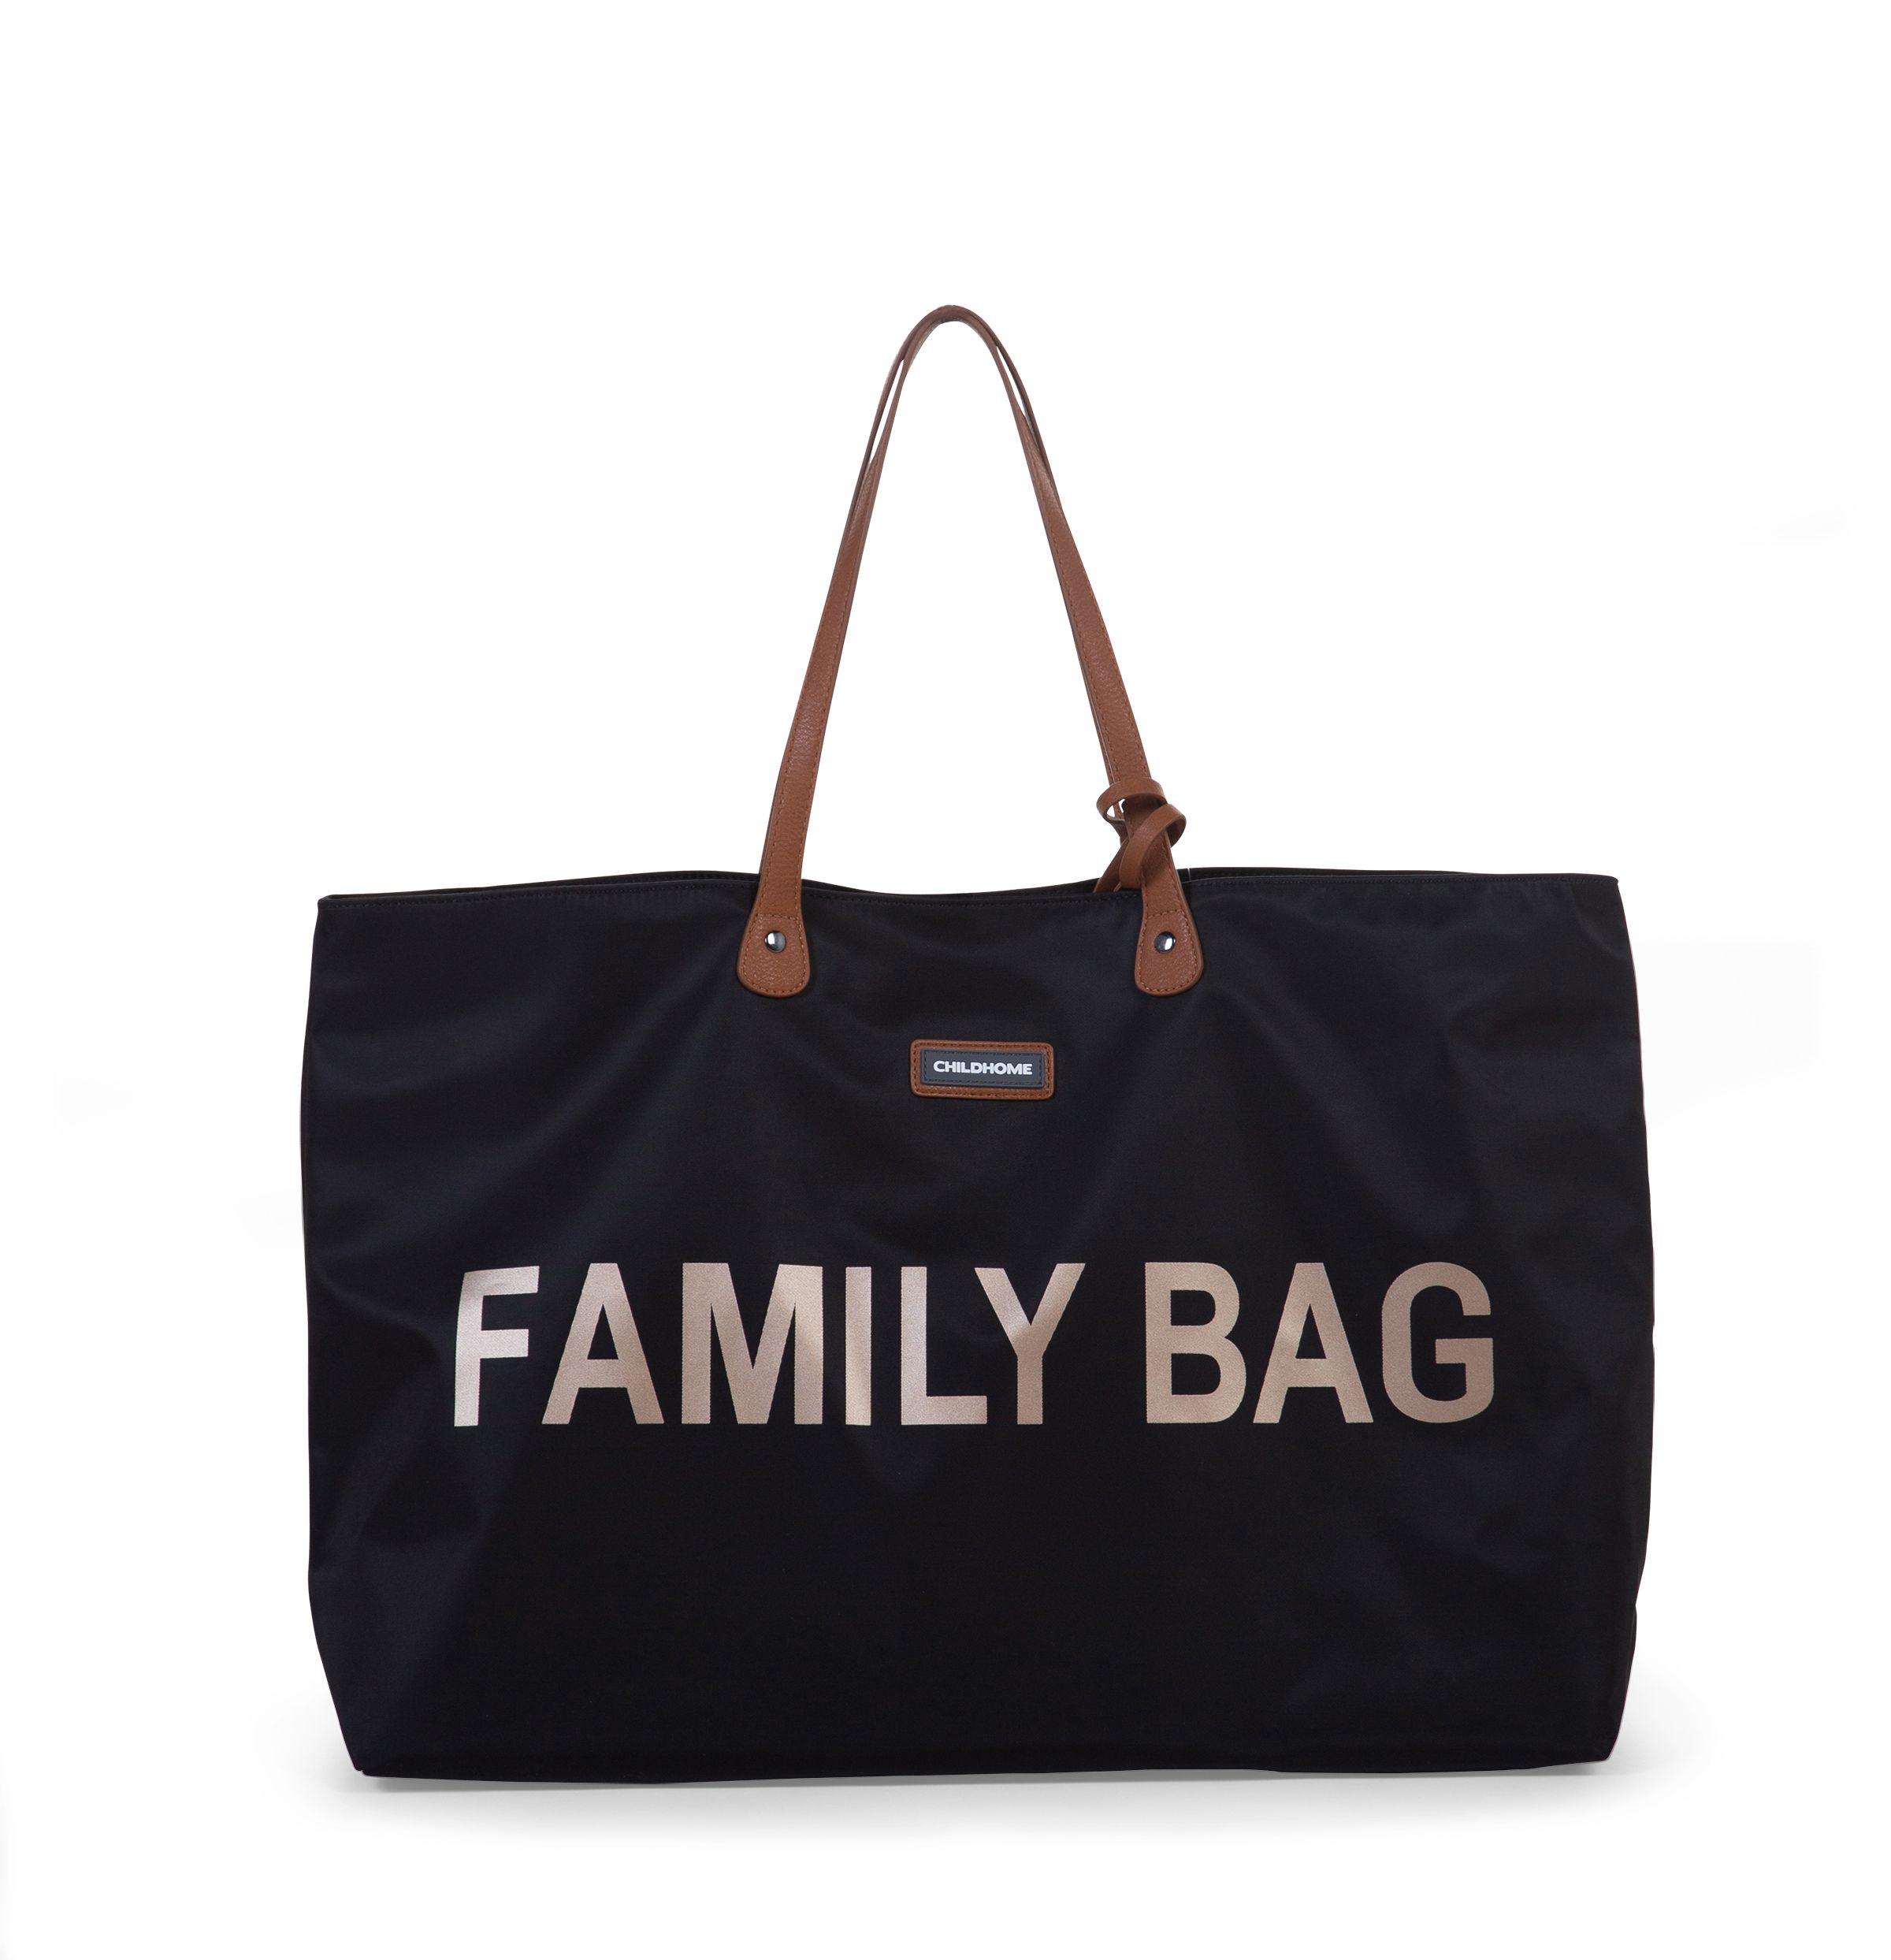 Childhome family bag black